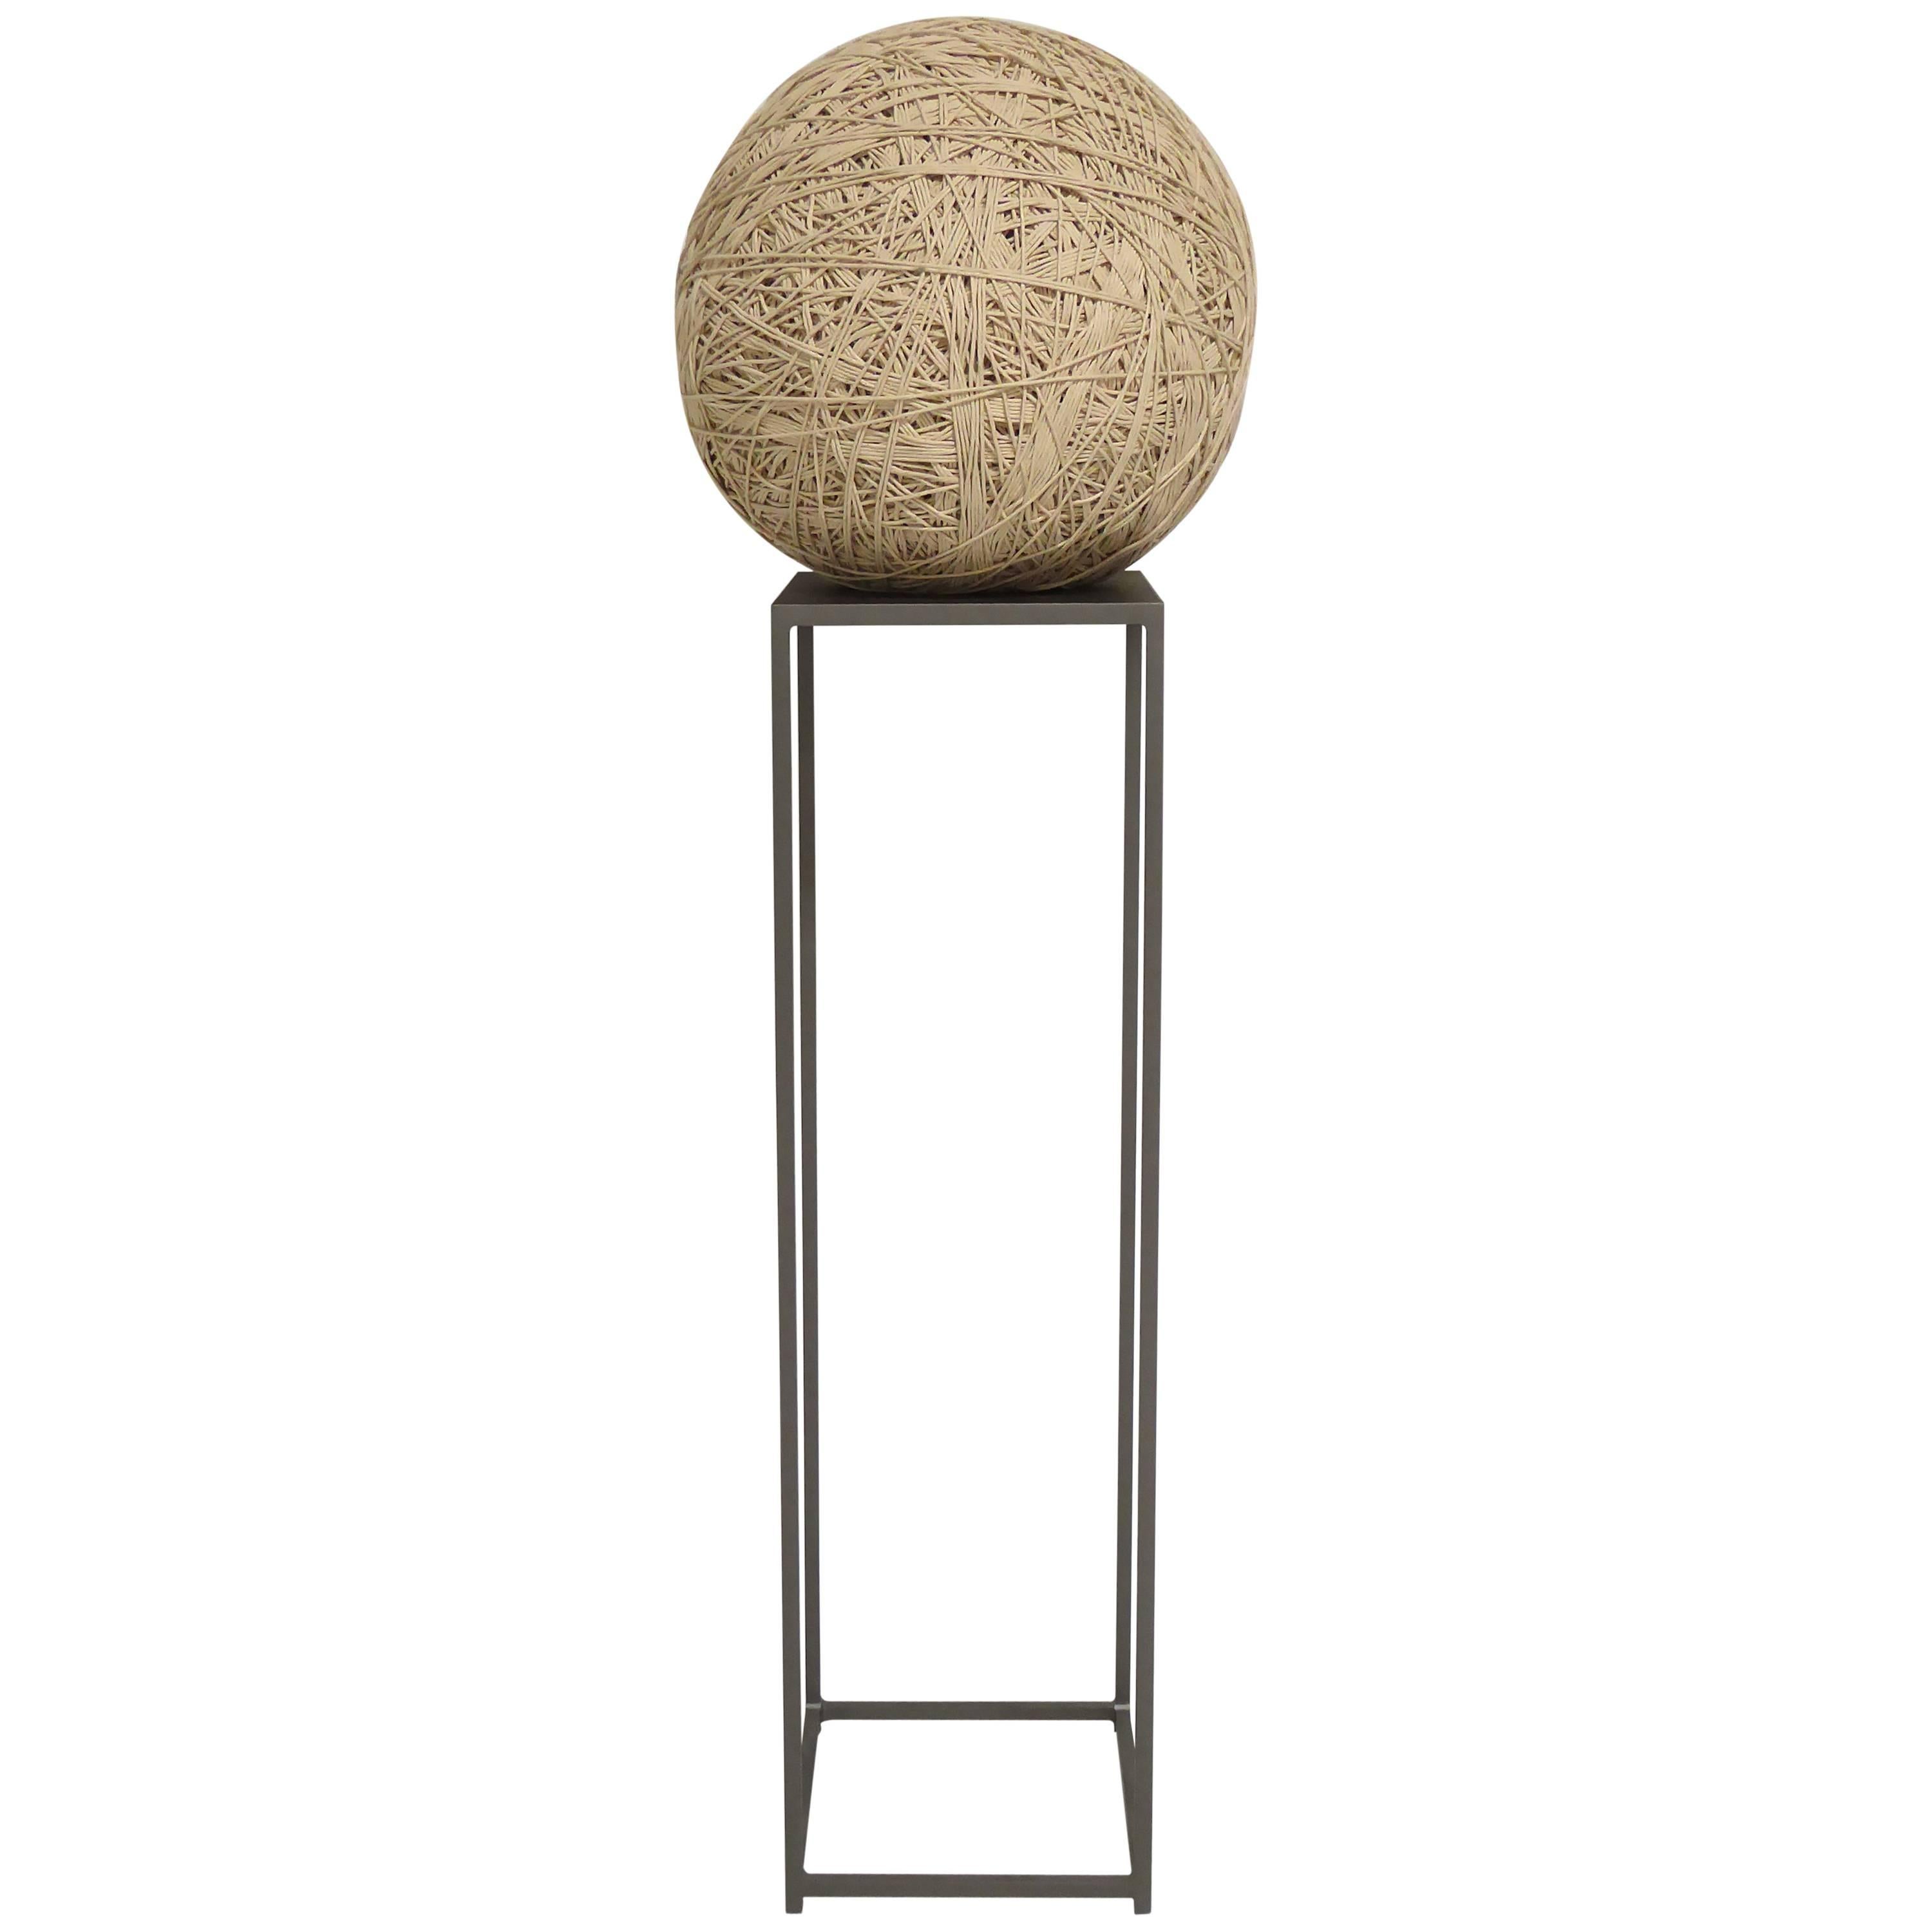 Primative Twine Ball Sculpture on Steel Pedestal For Sale